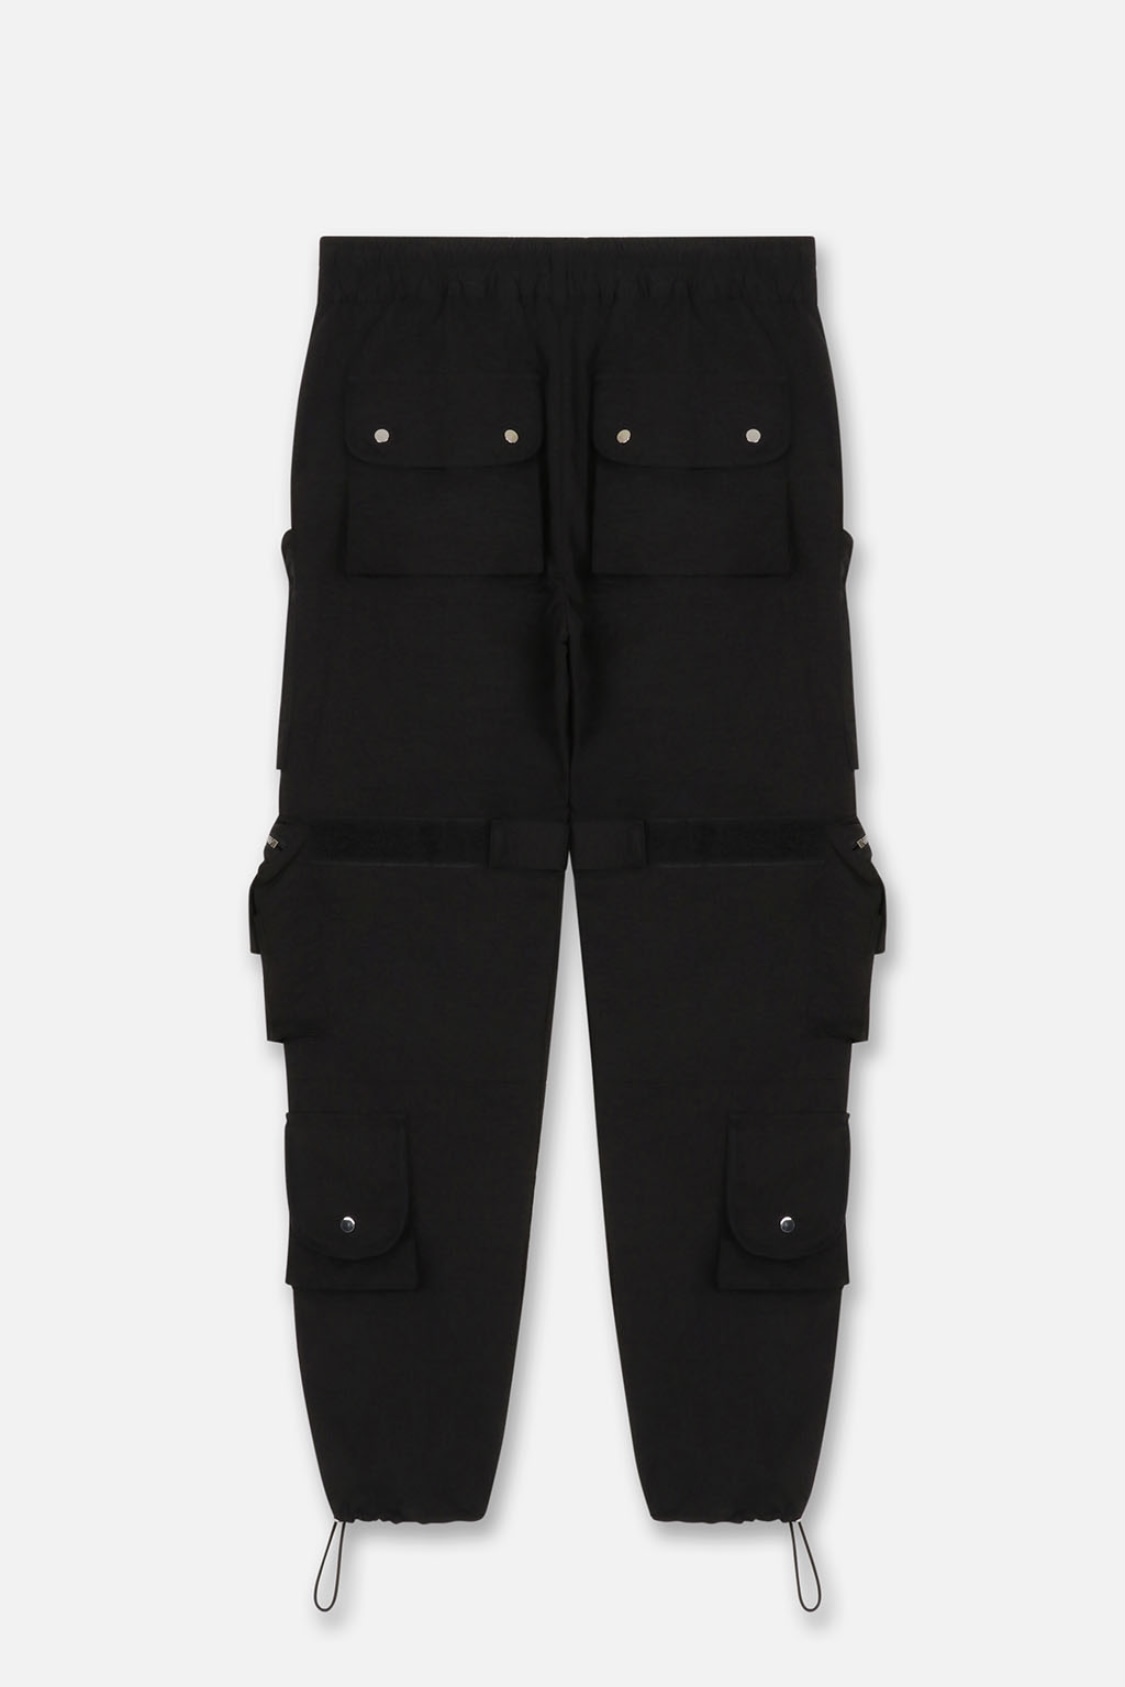 MLVINCE®︎ / tactical nylon cargo pants - OTHELLO KUMAMOTO